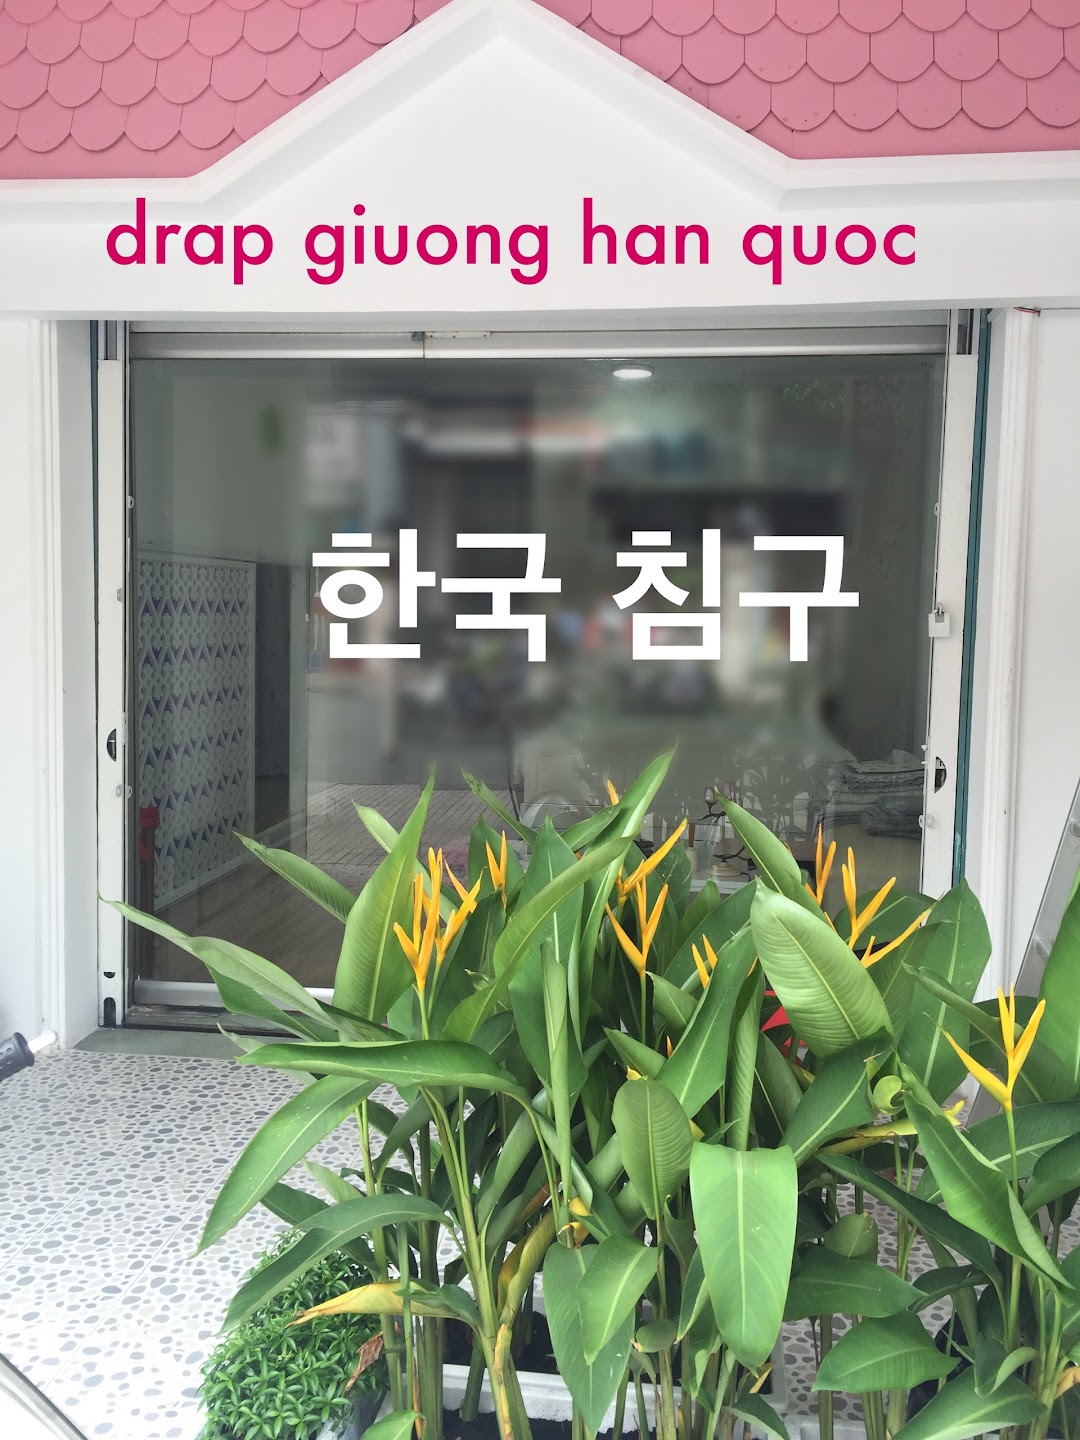 Drapgiuonghanquoc.com